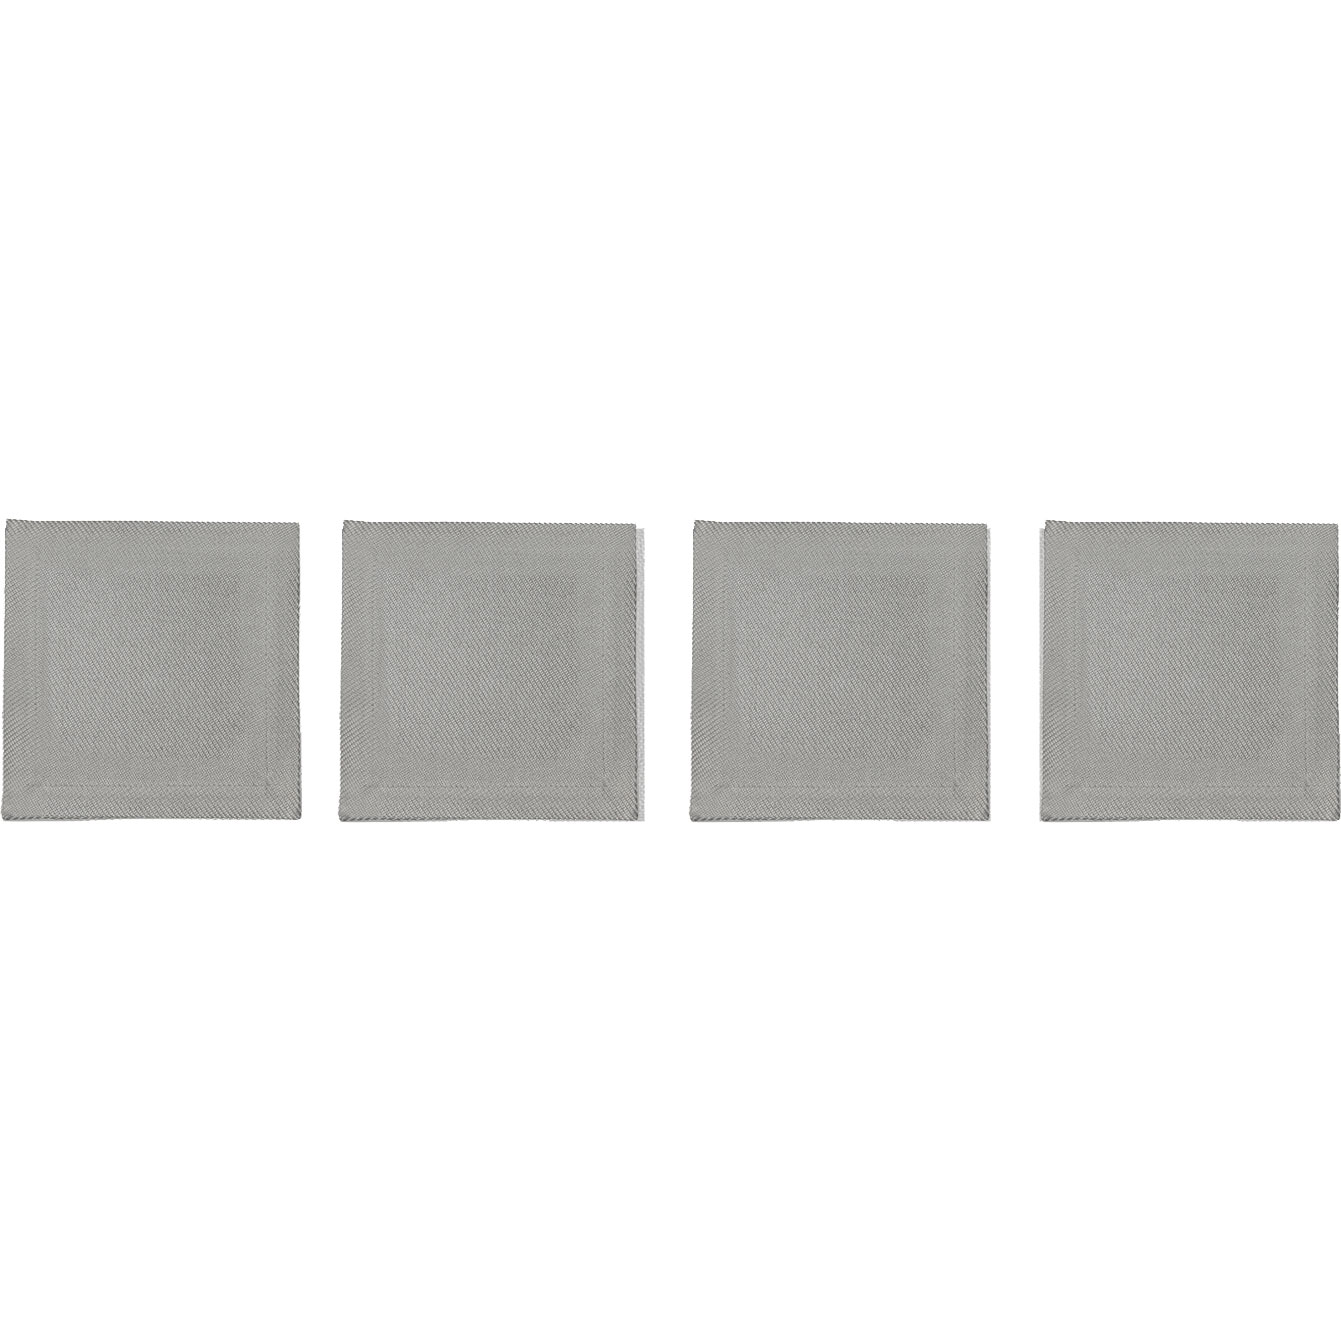 Plain Coasters 10x10 cm 4-pack, Grey